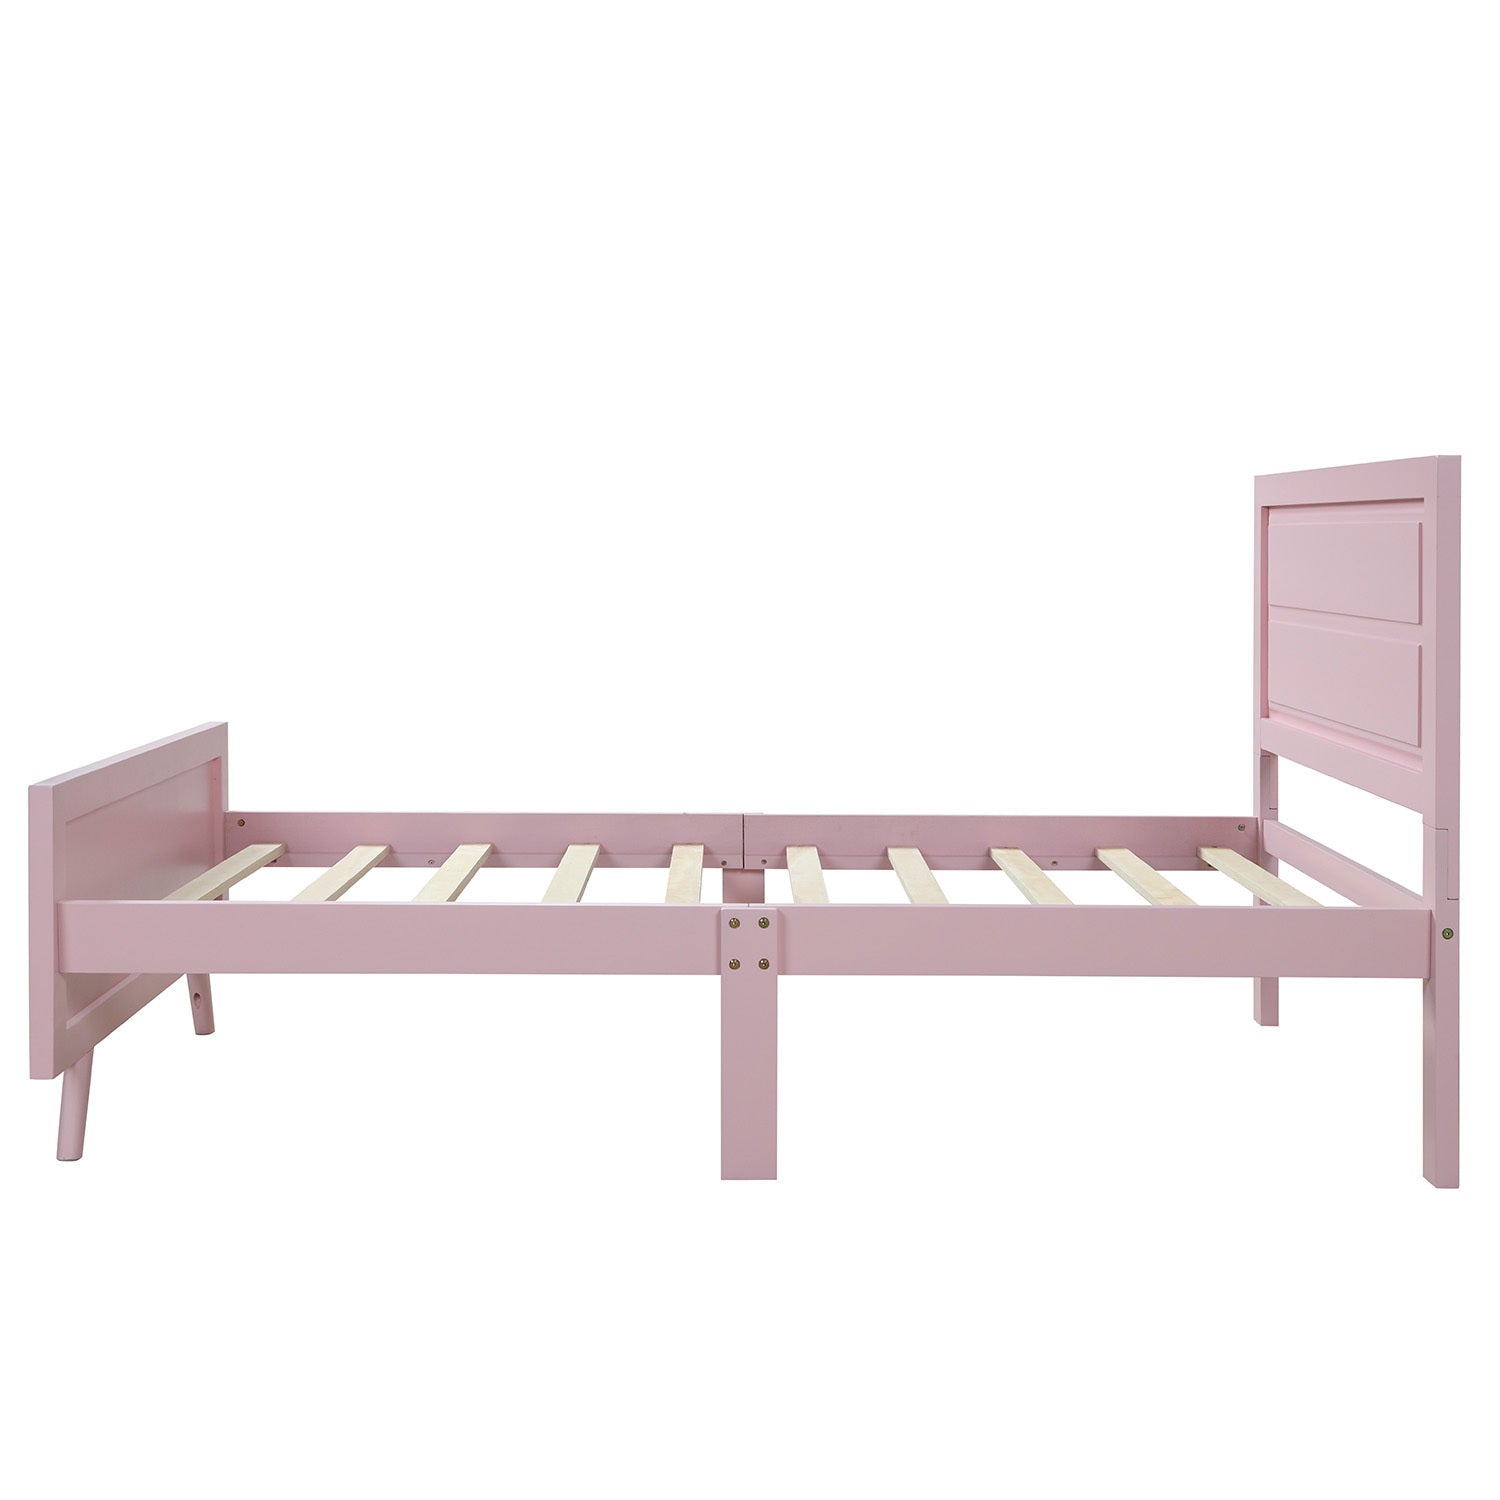 Wood Platform Twin Bed Frame with Headboard | Pink Finish | Wood Slat Support | Mattress Foundation